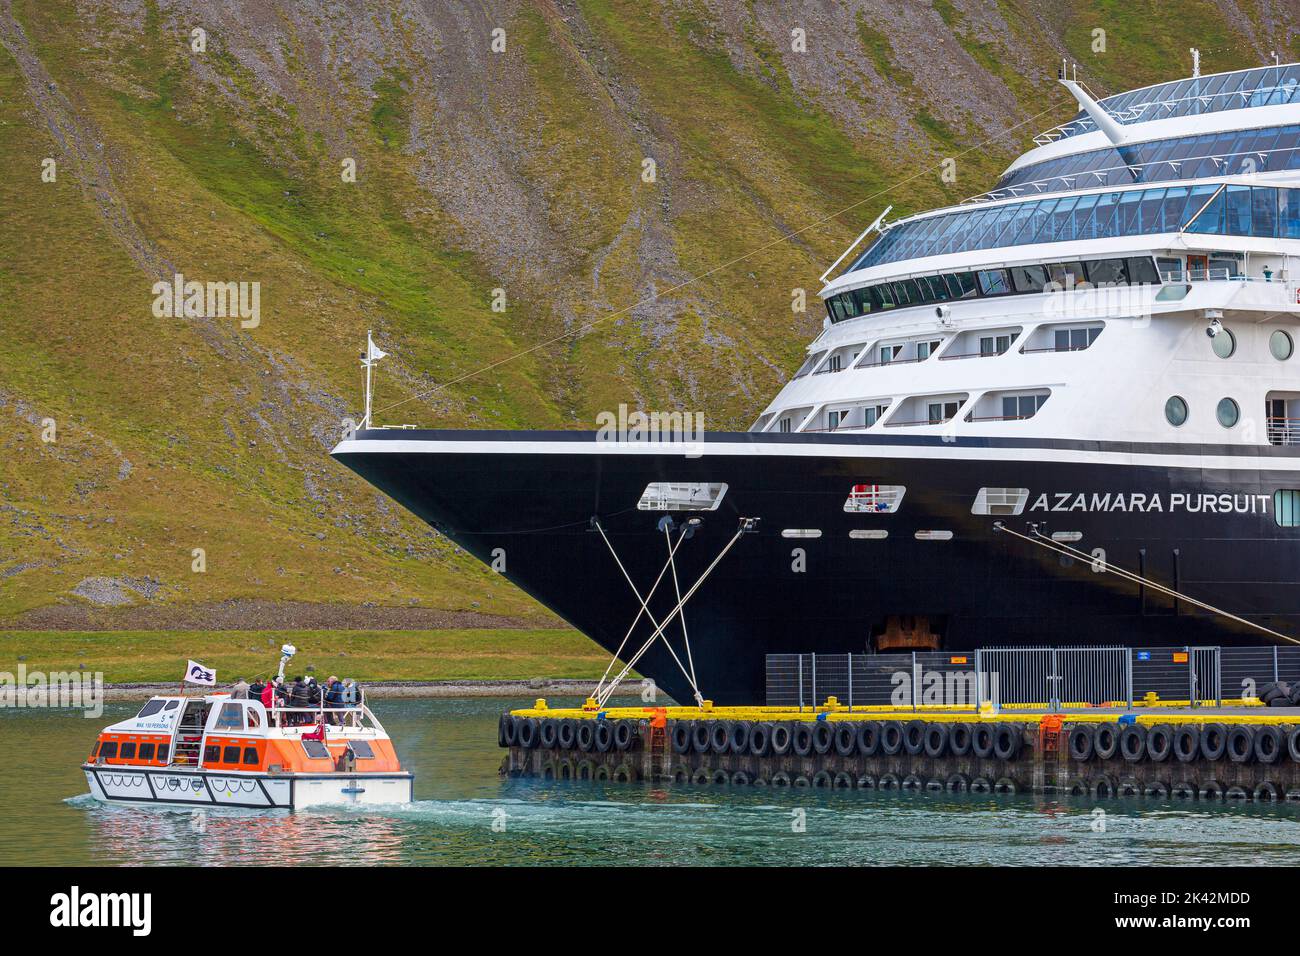 Crucero, Isafjordur, Islandia, Europa Foto de stock